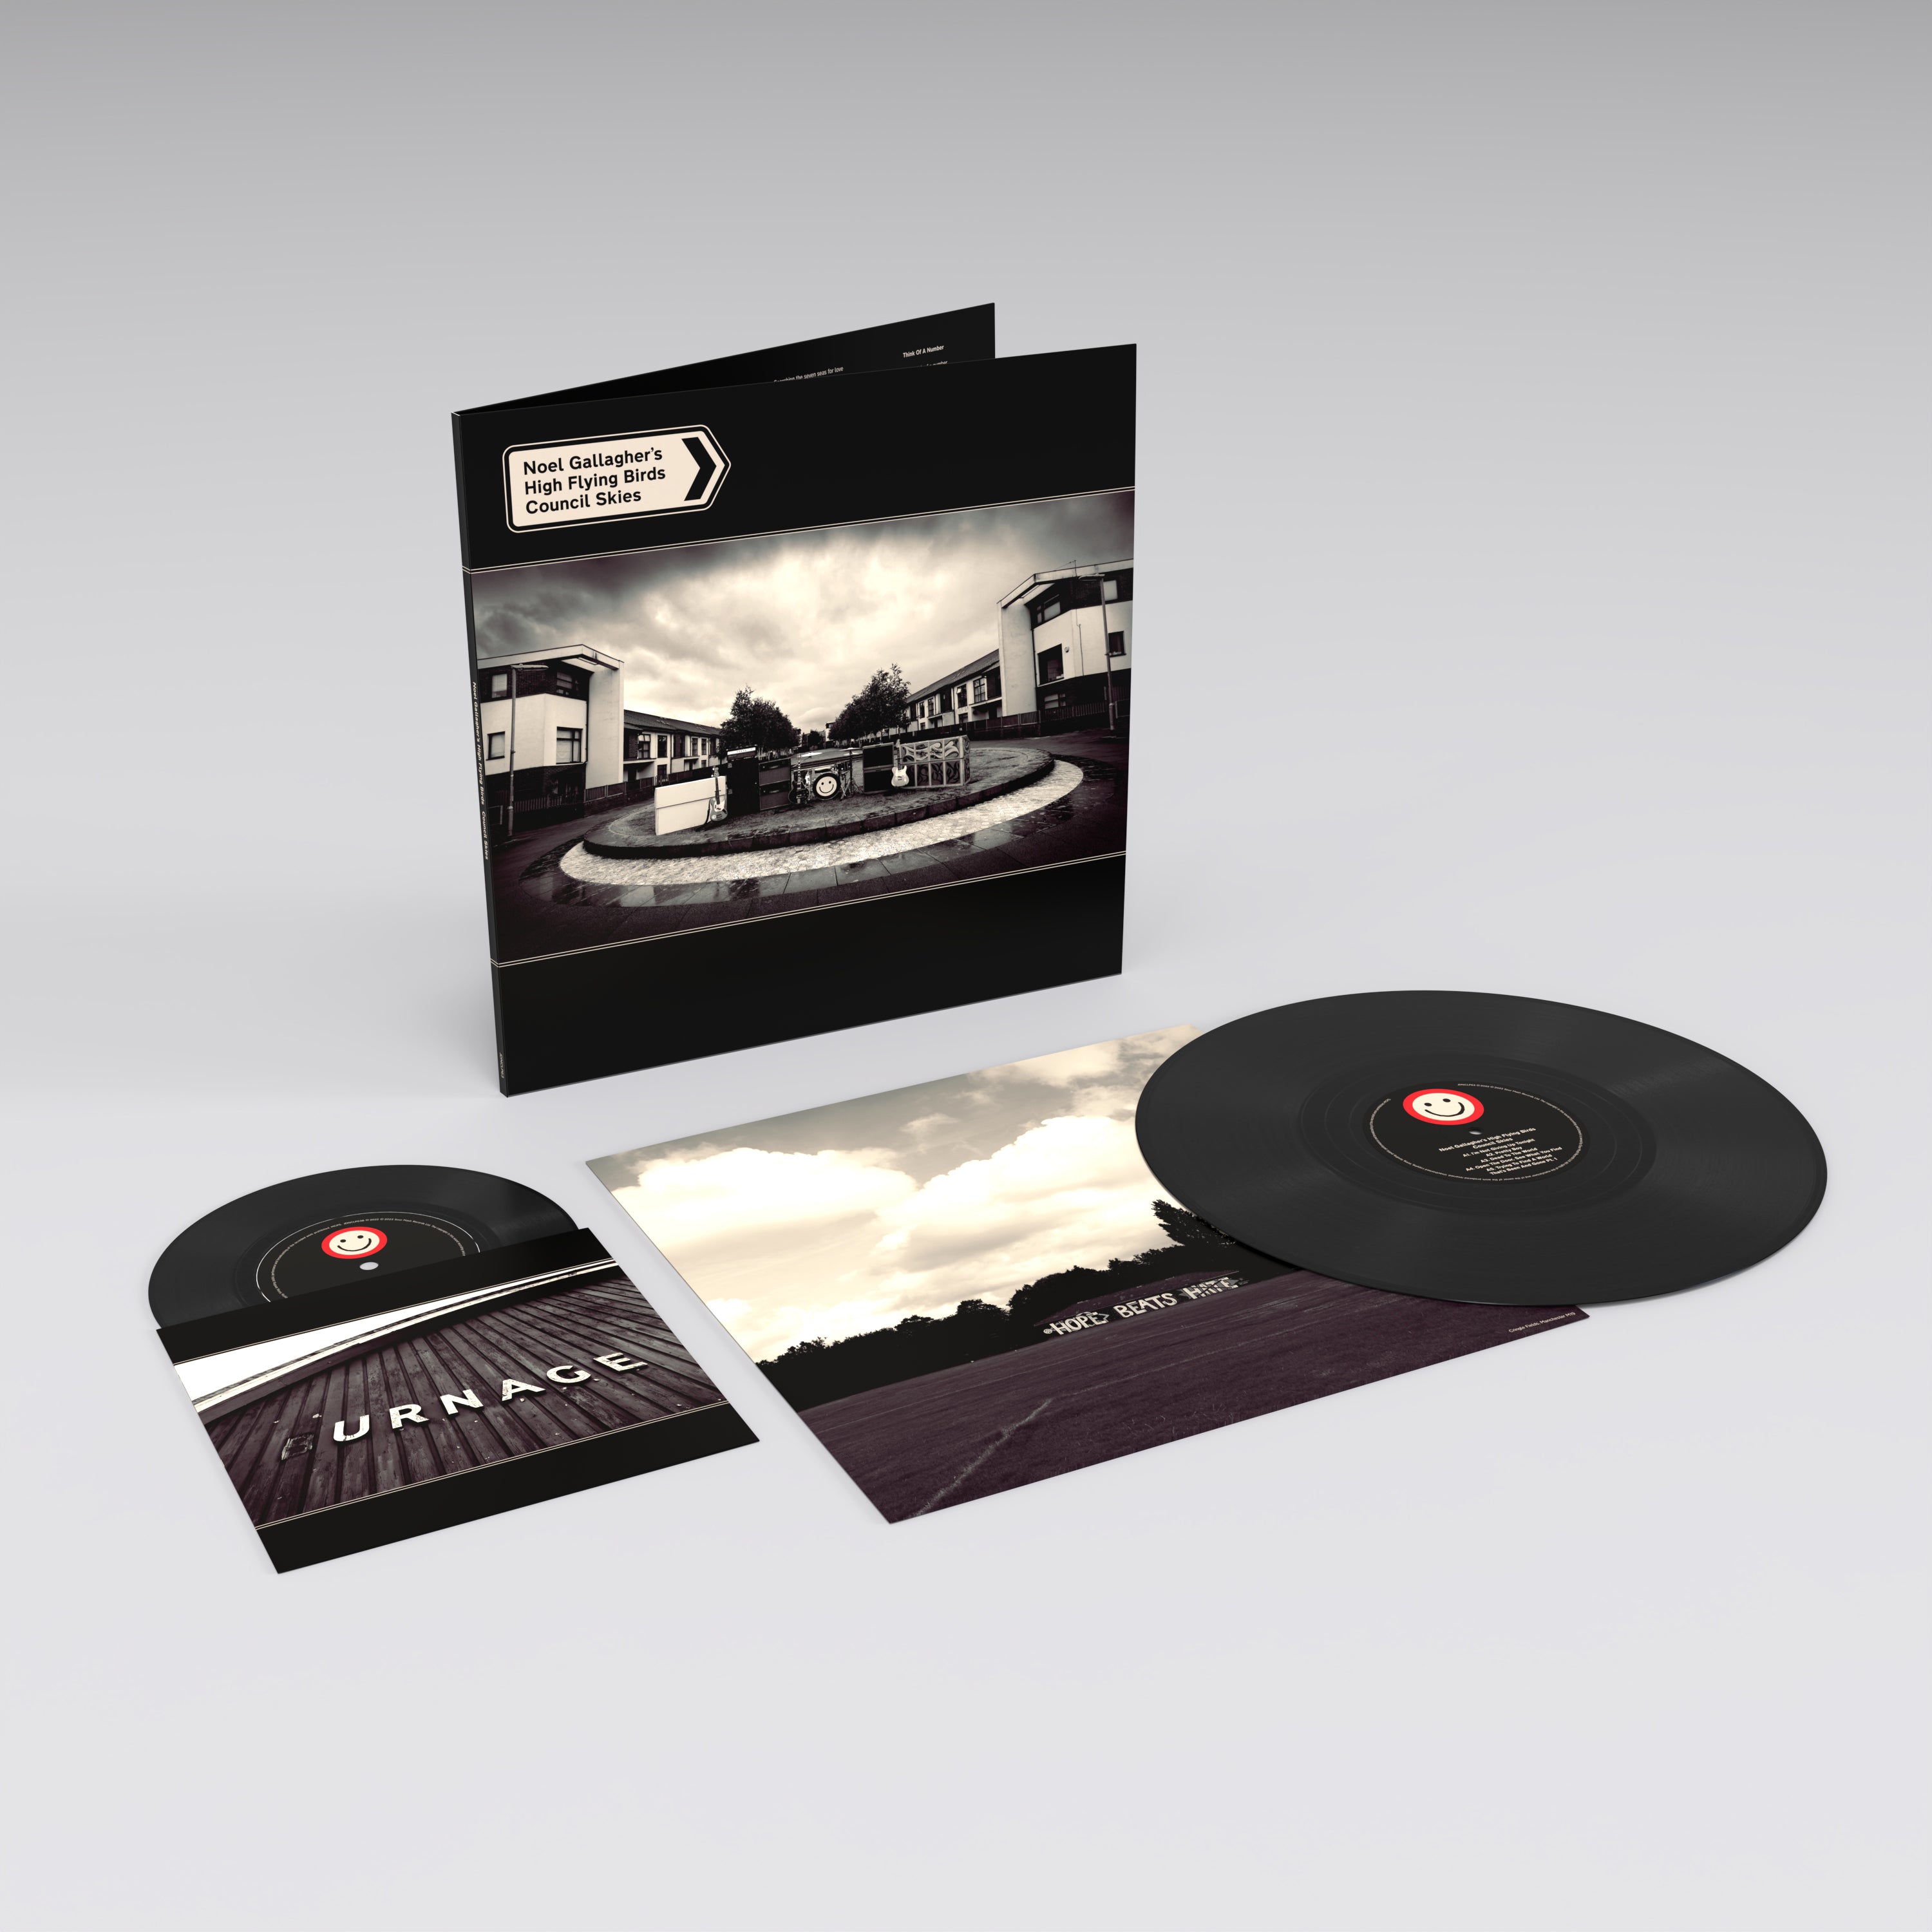 Noel Gallagher's High Flying Birds - Council Skies (Vinyl LP + Bonus 7")